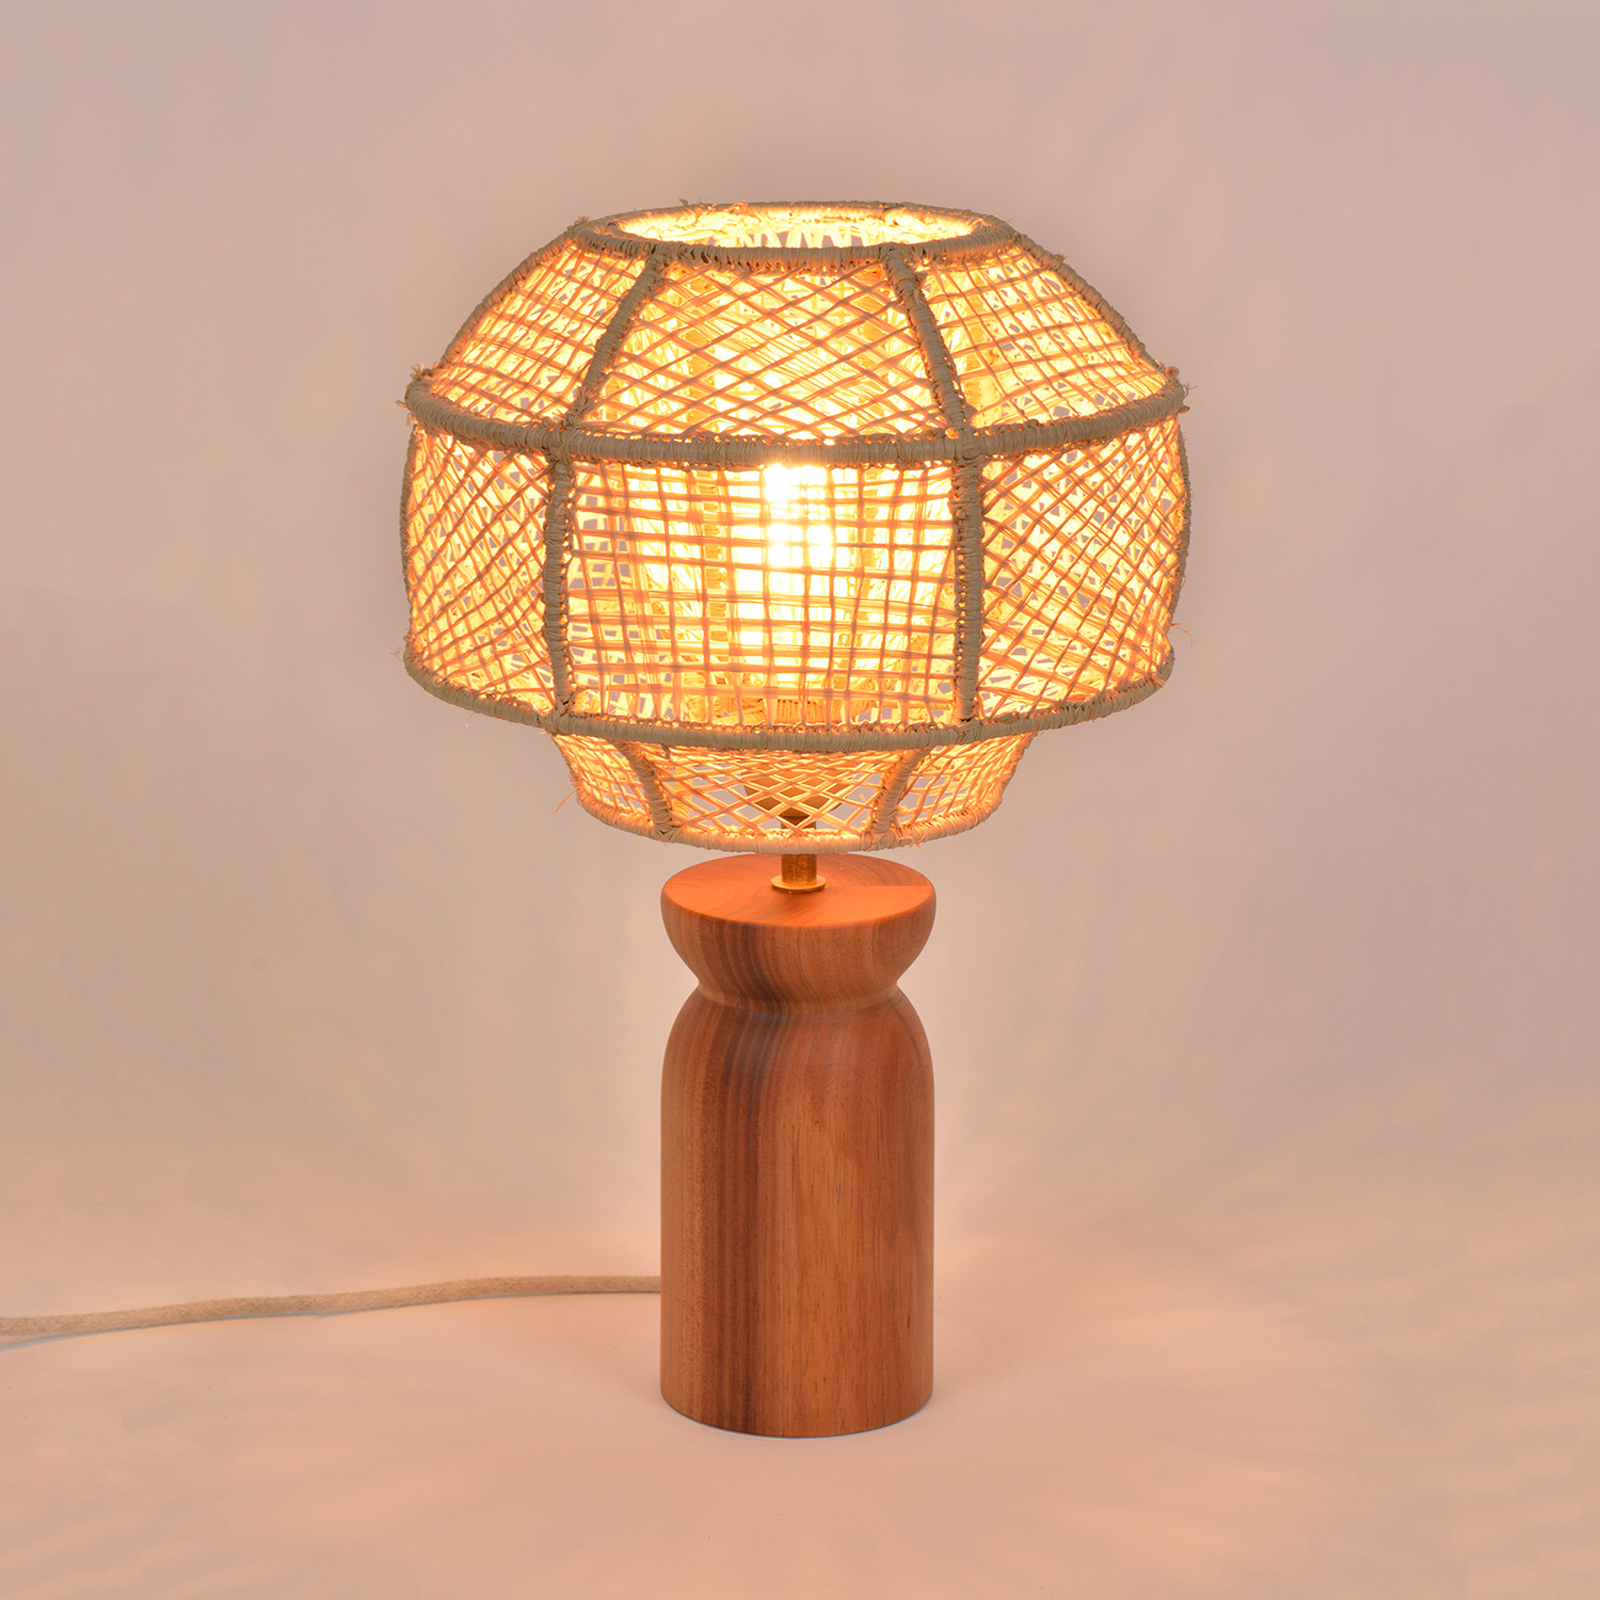 MARKET SET Odyssée table lamp, height 43cm